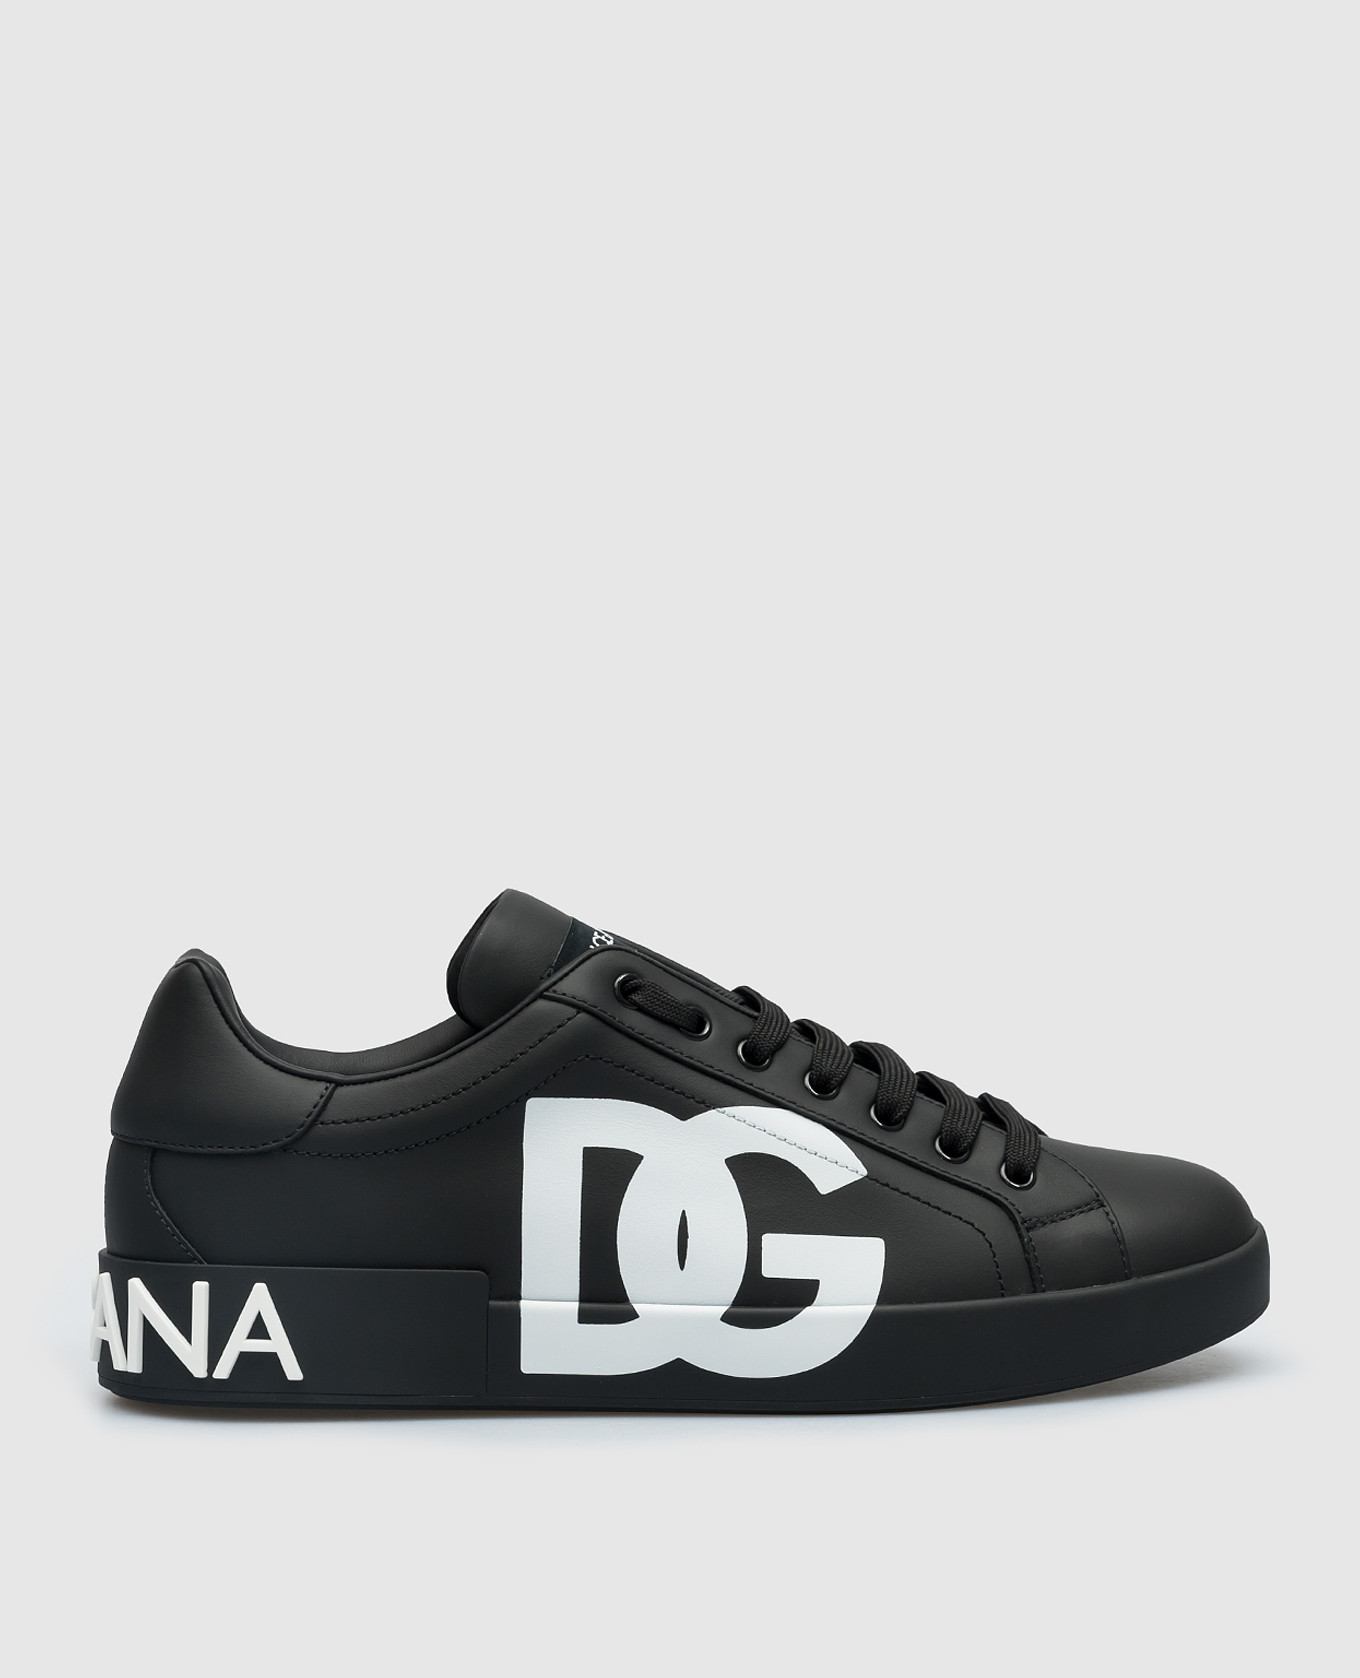 Portofino black leather sneakers with contrasting logo